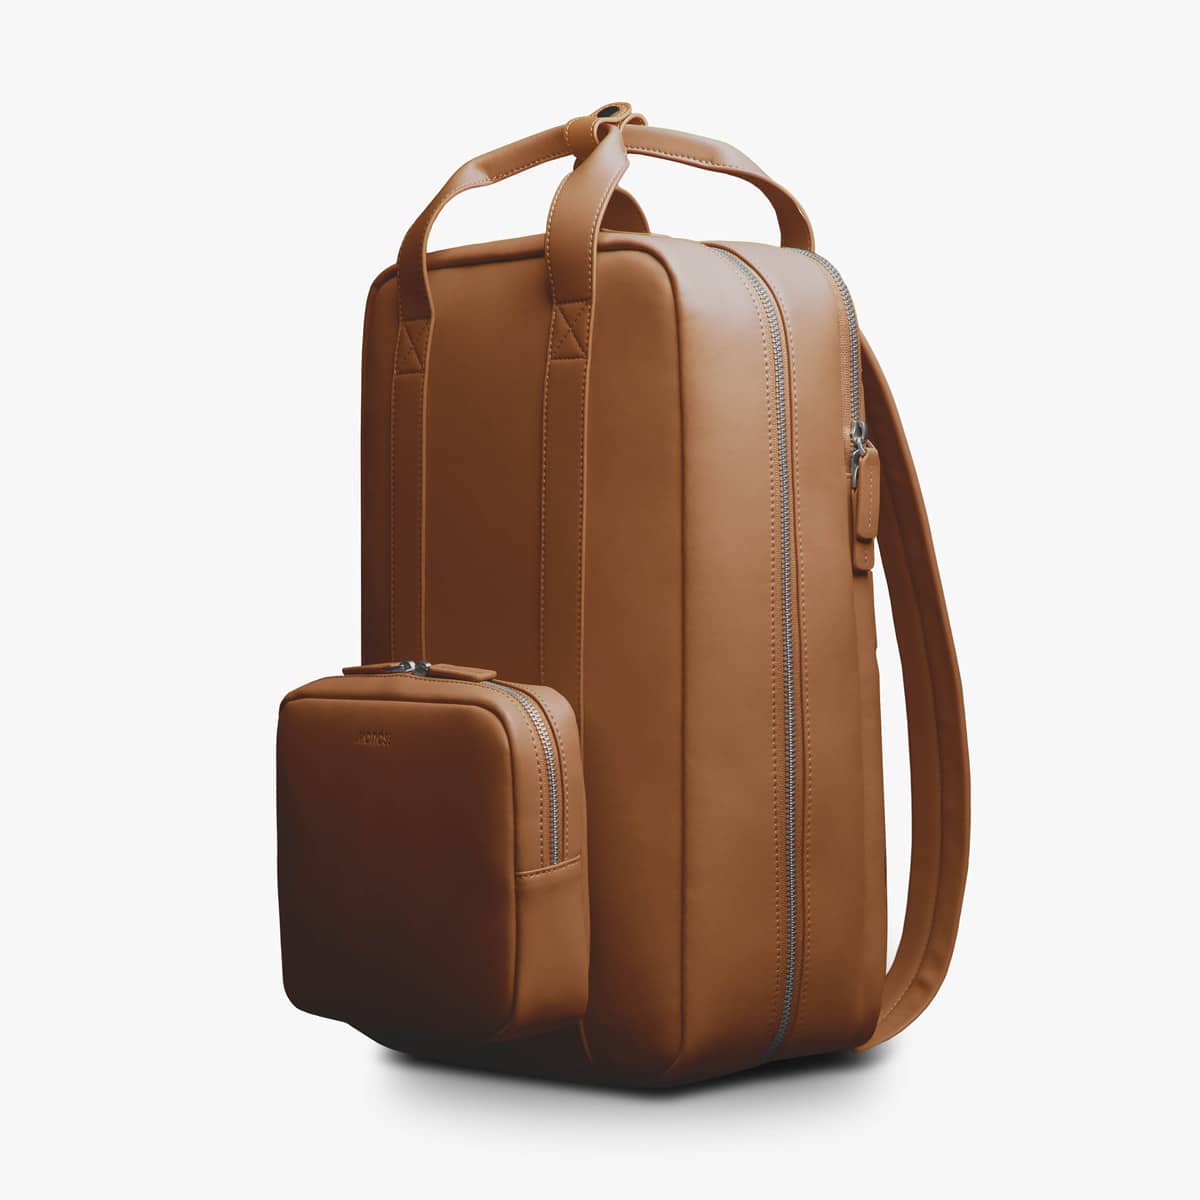 Best Backpack for Travel